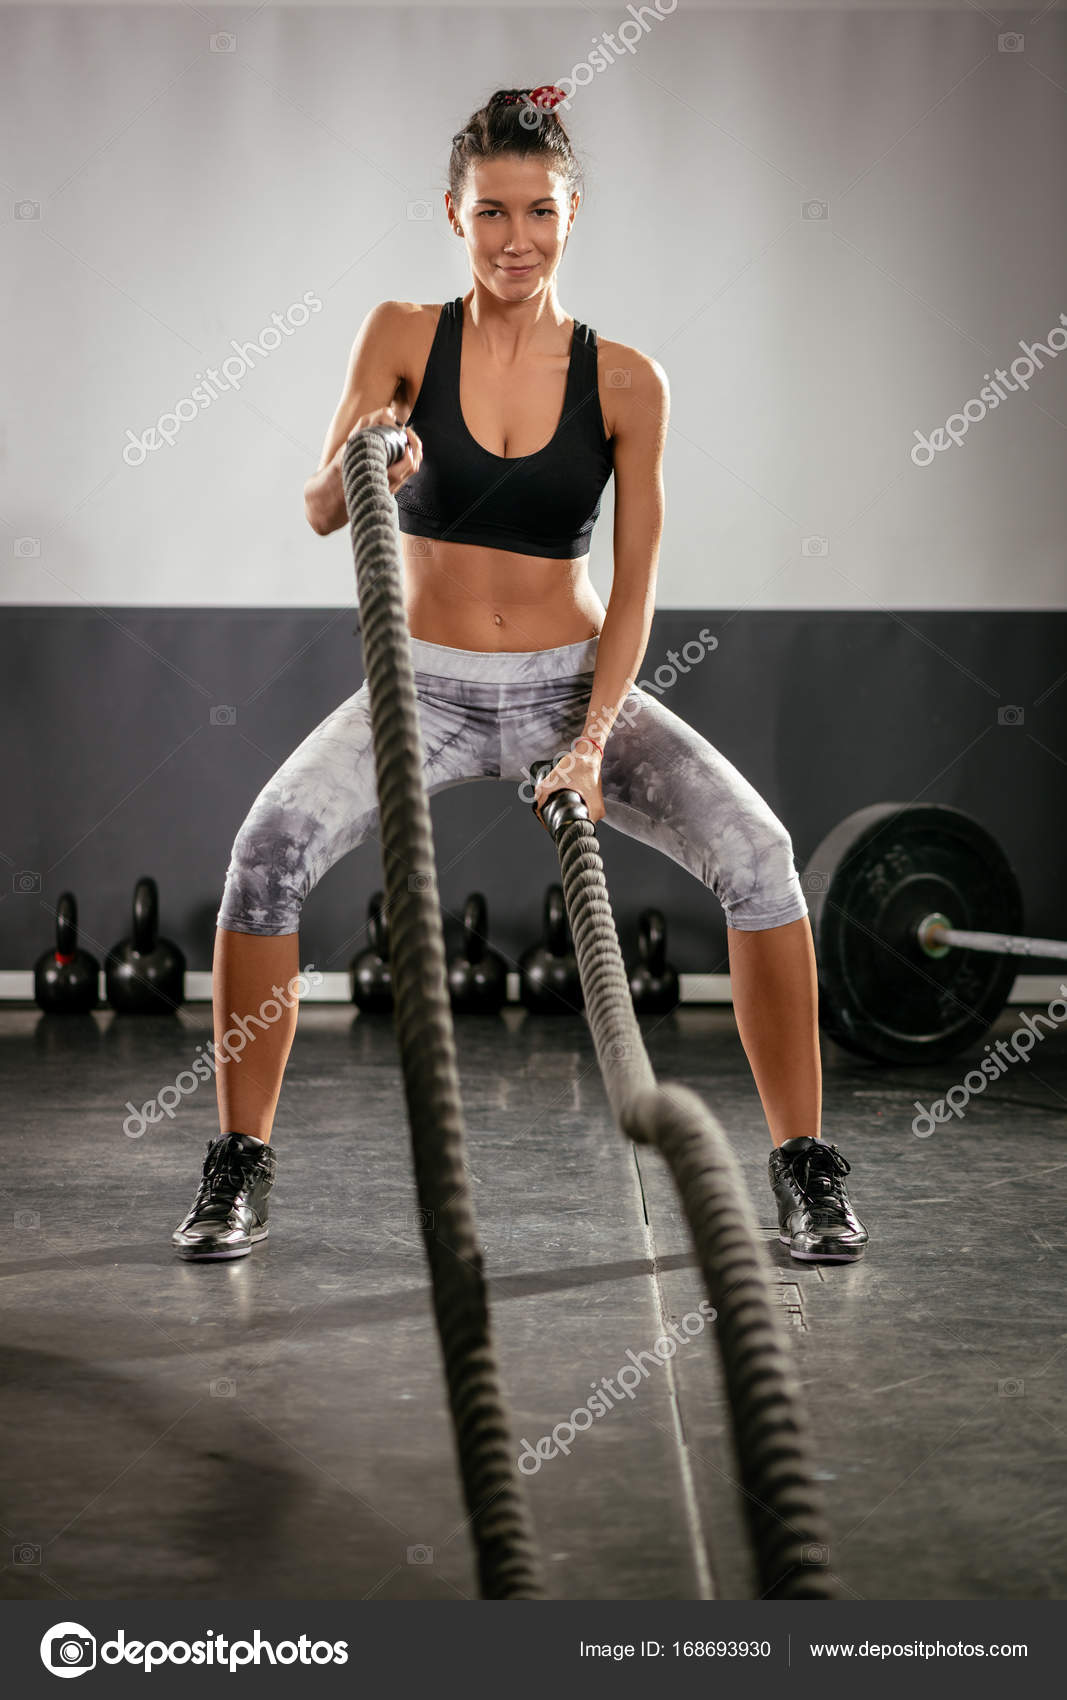 Crossfit Rope Training — Stock Photo © MilanMarkovic #168693930